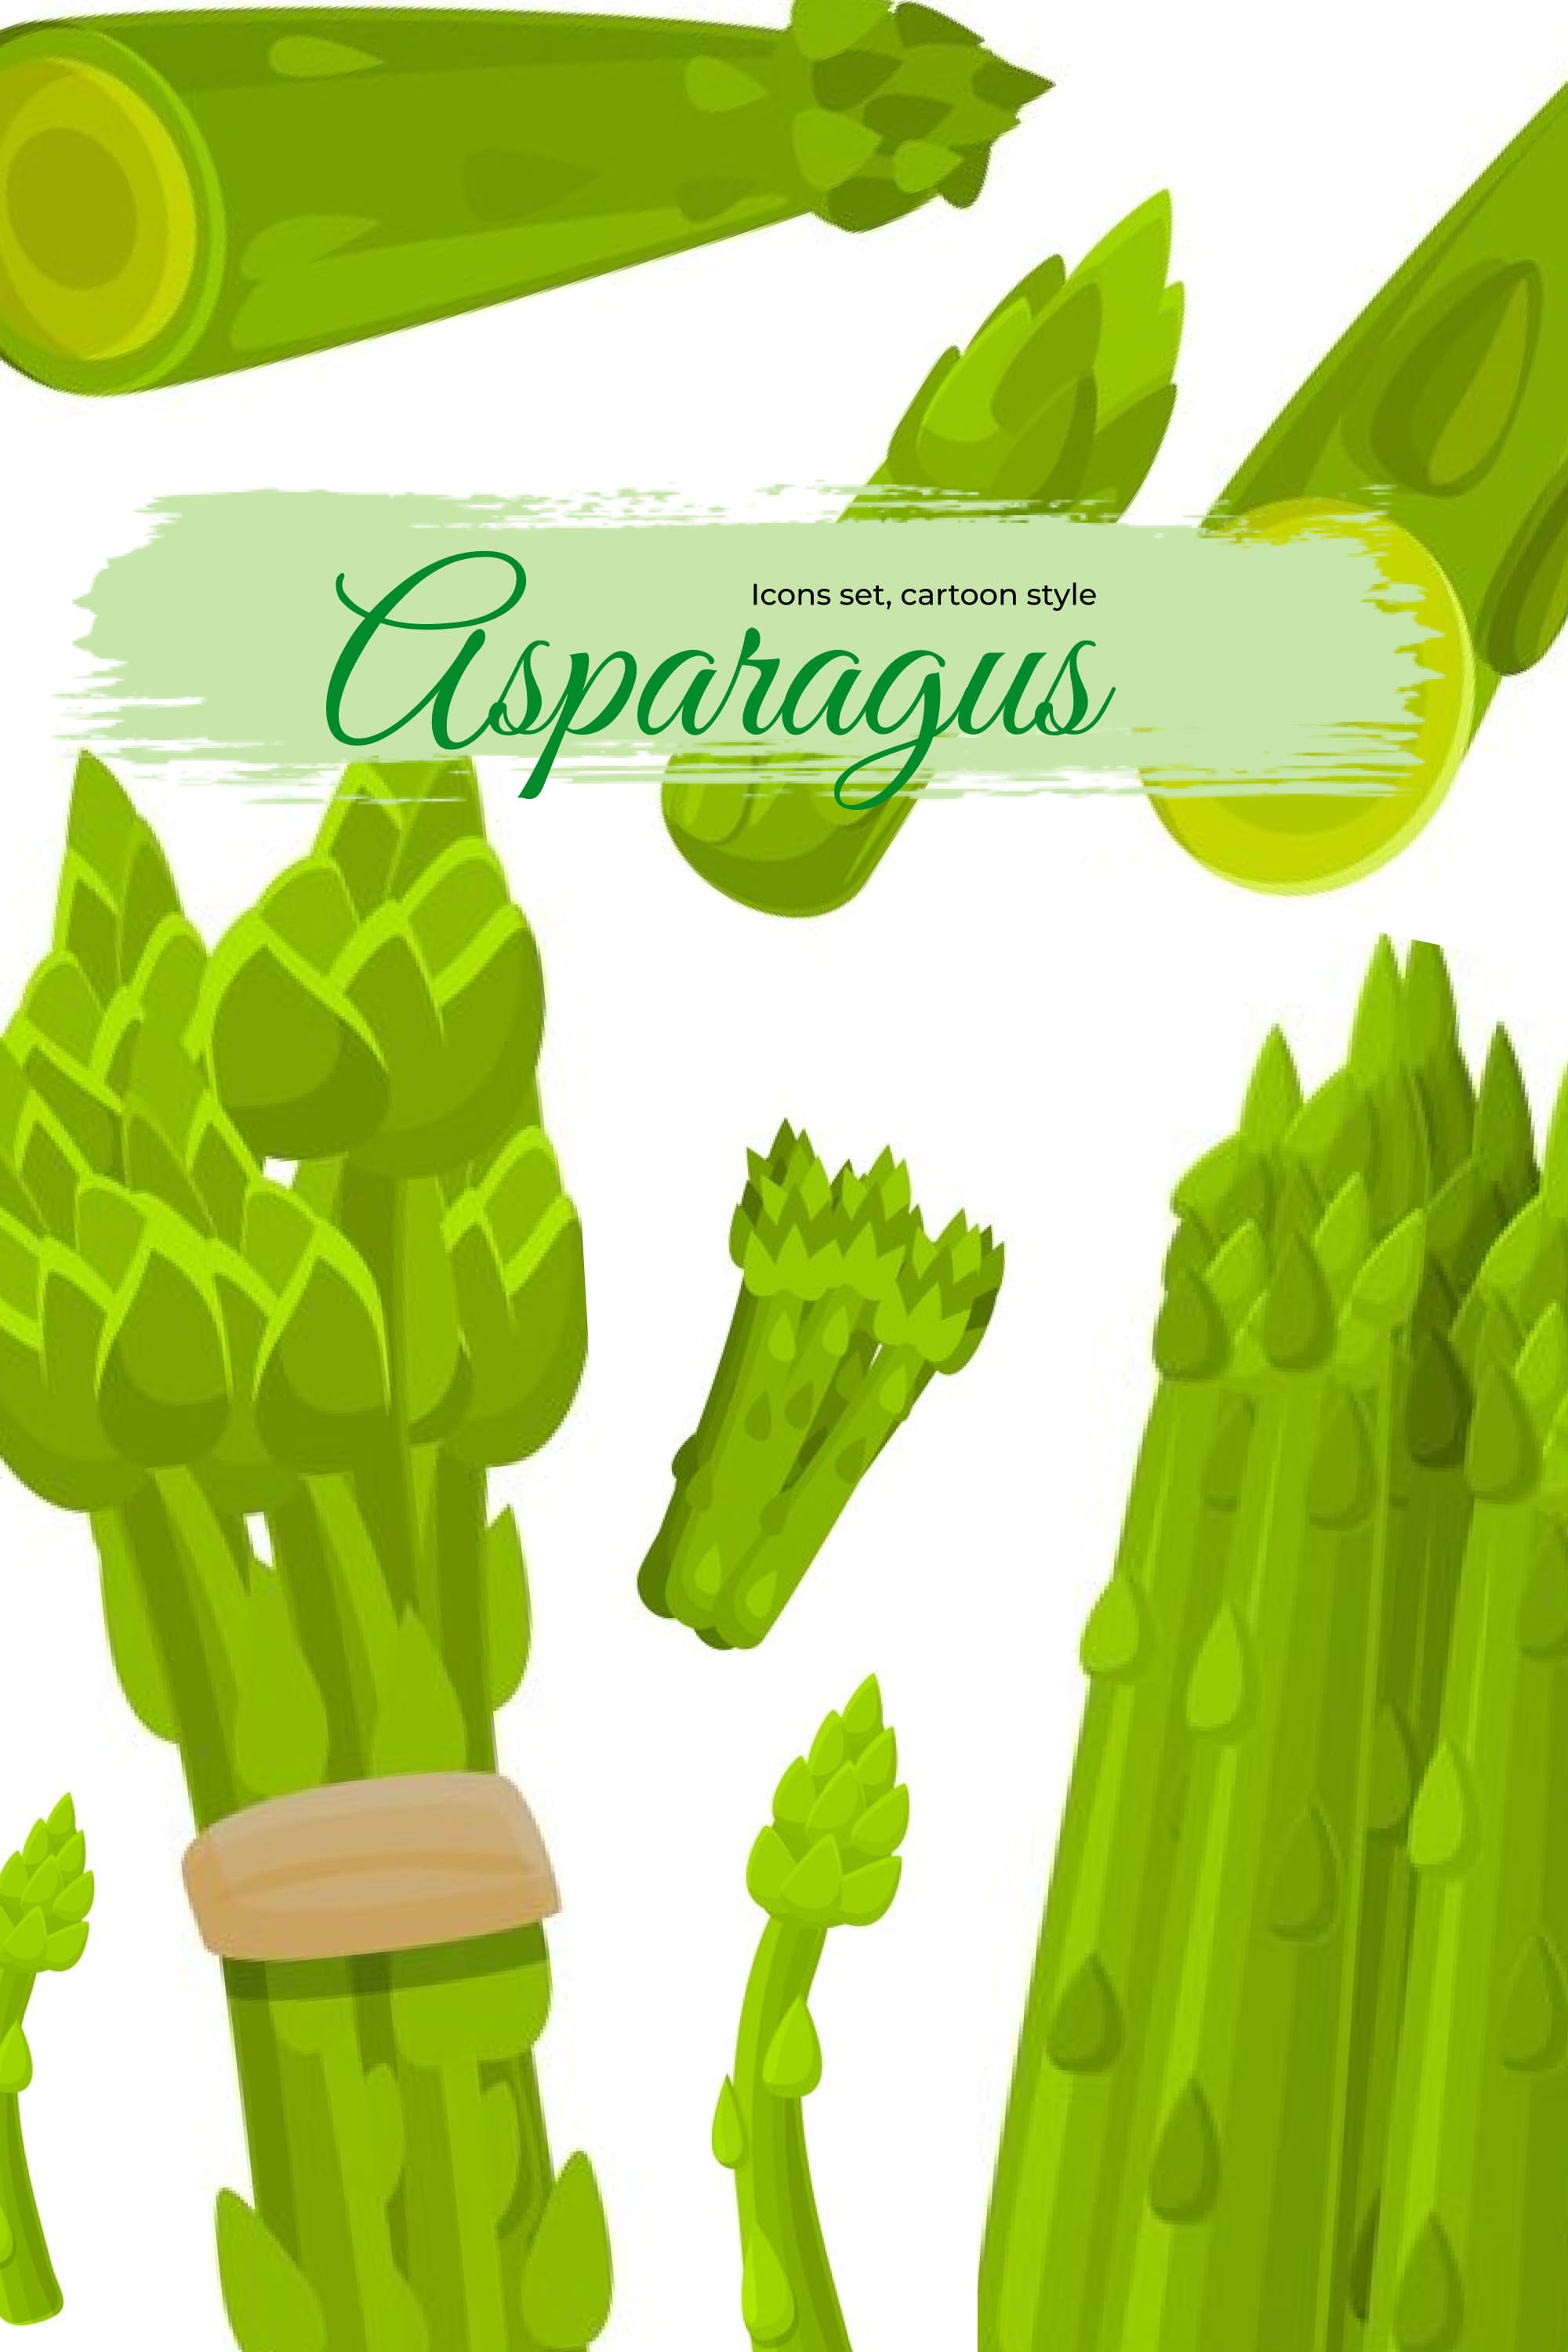 asparagus icons set cartoon style pinterest